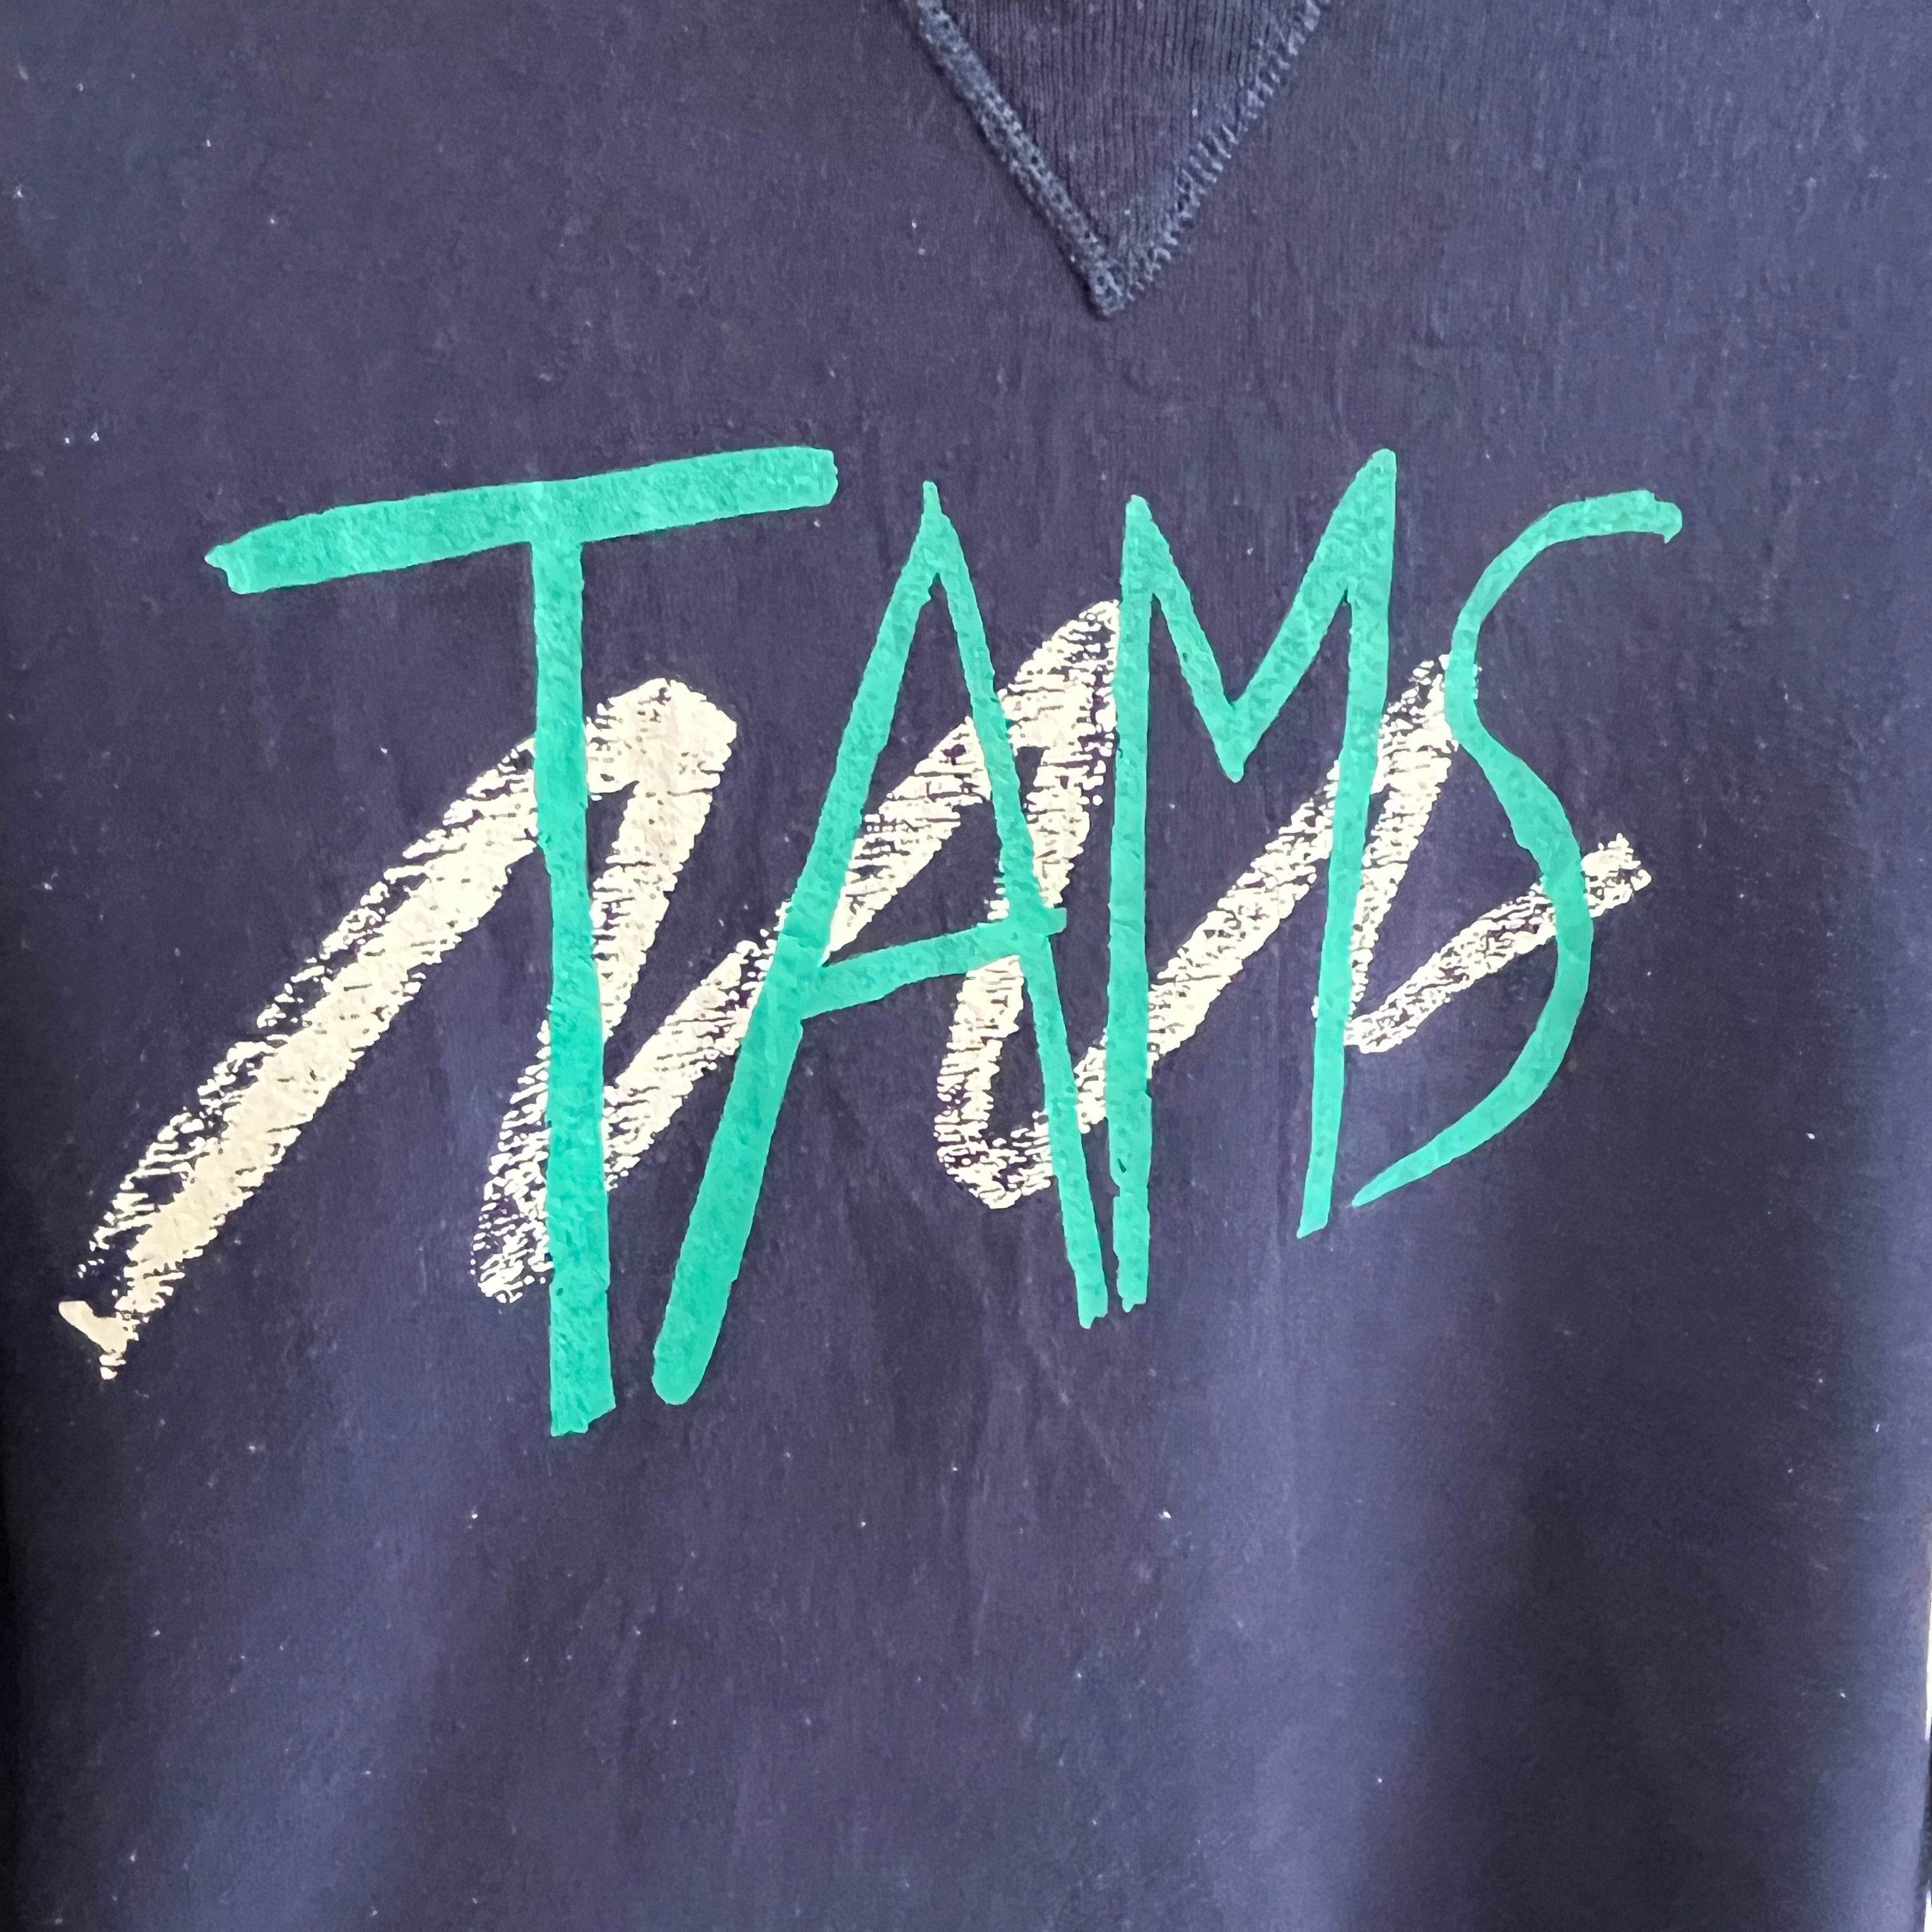 1980s Tams Sweatshirt